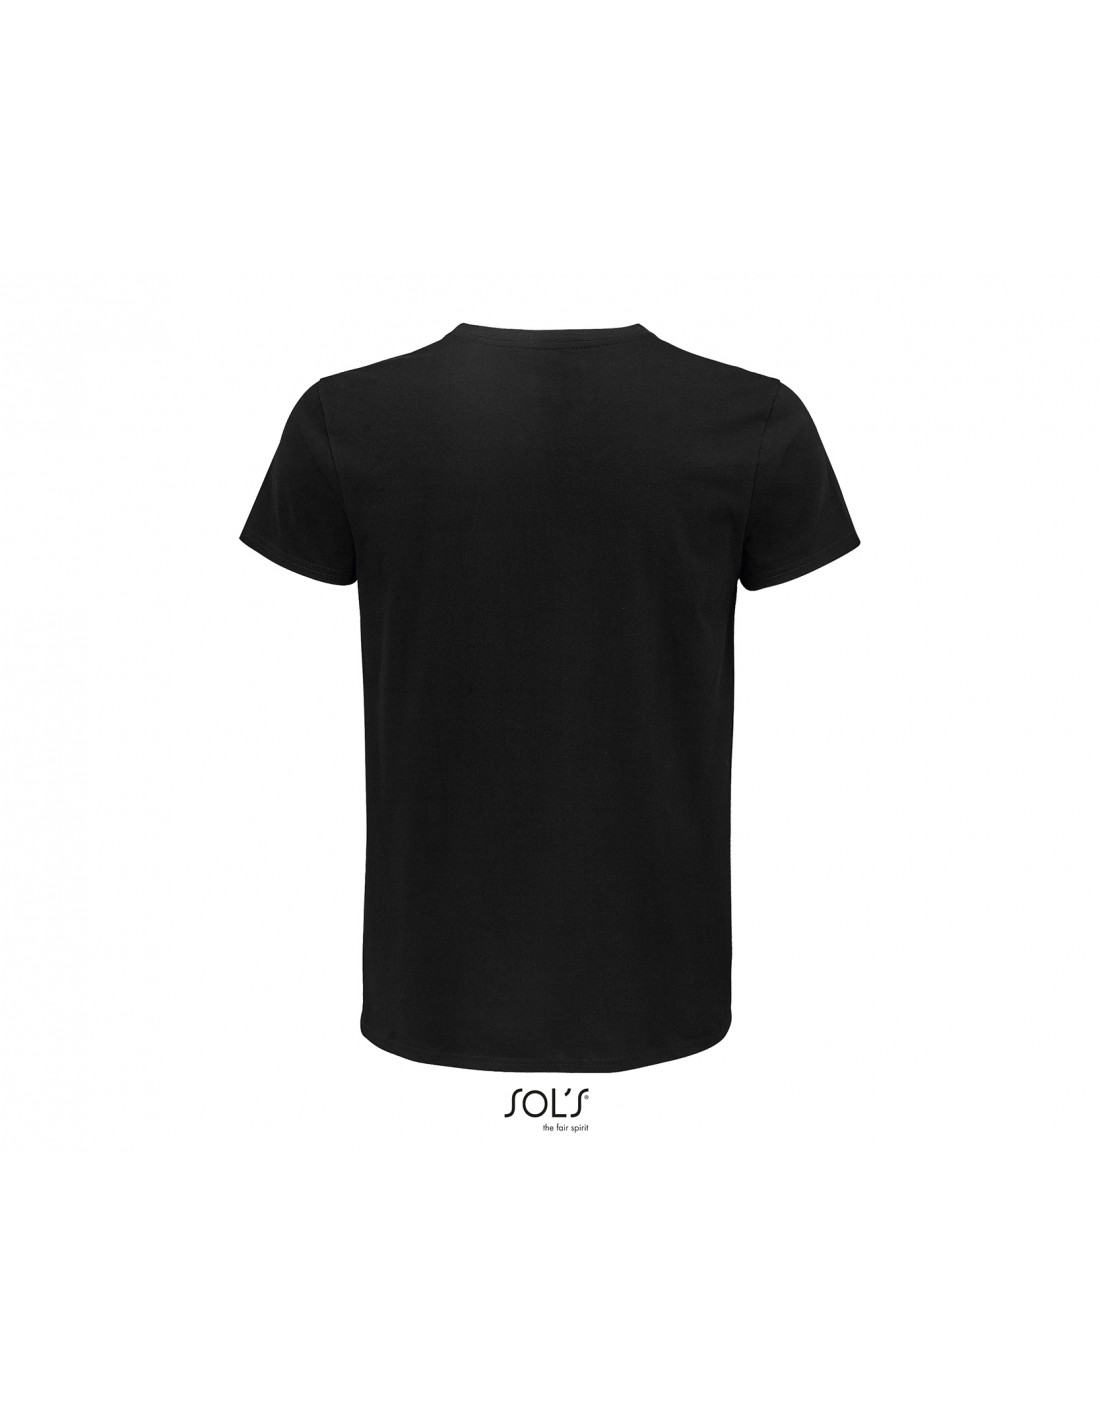 Camiseta bordado negro - 17,95 €